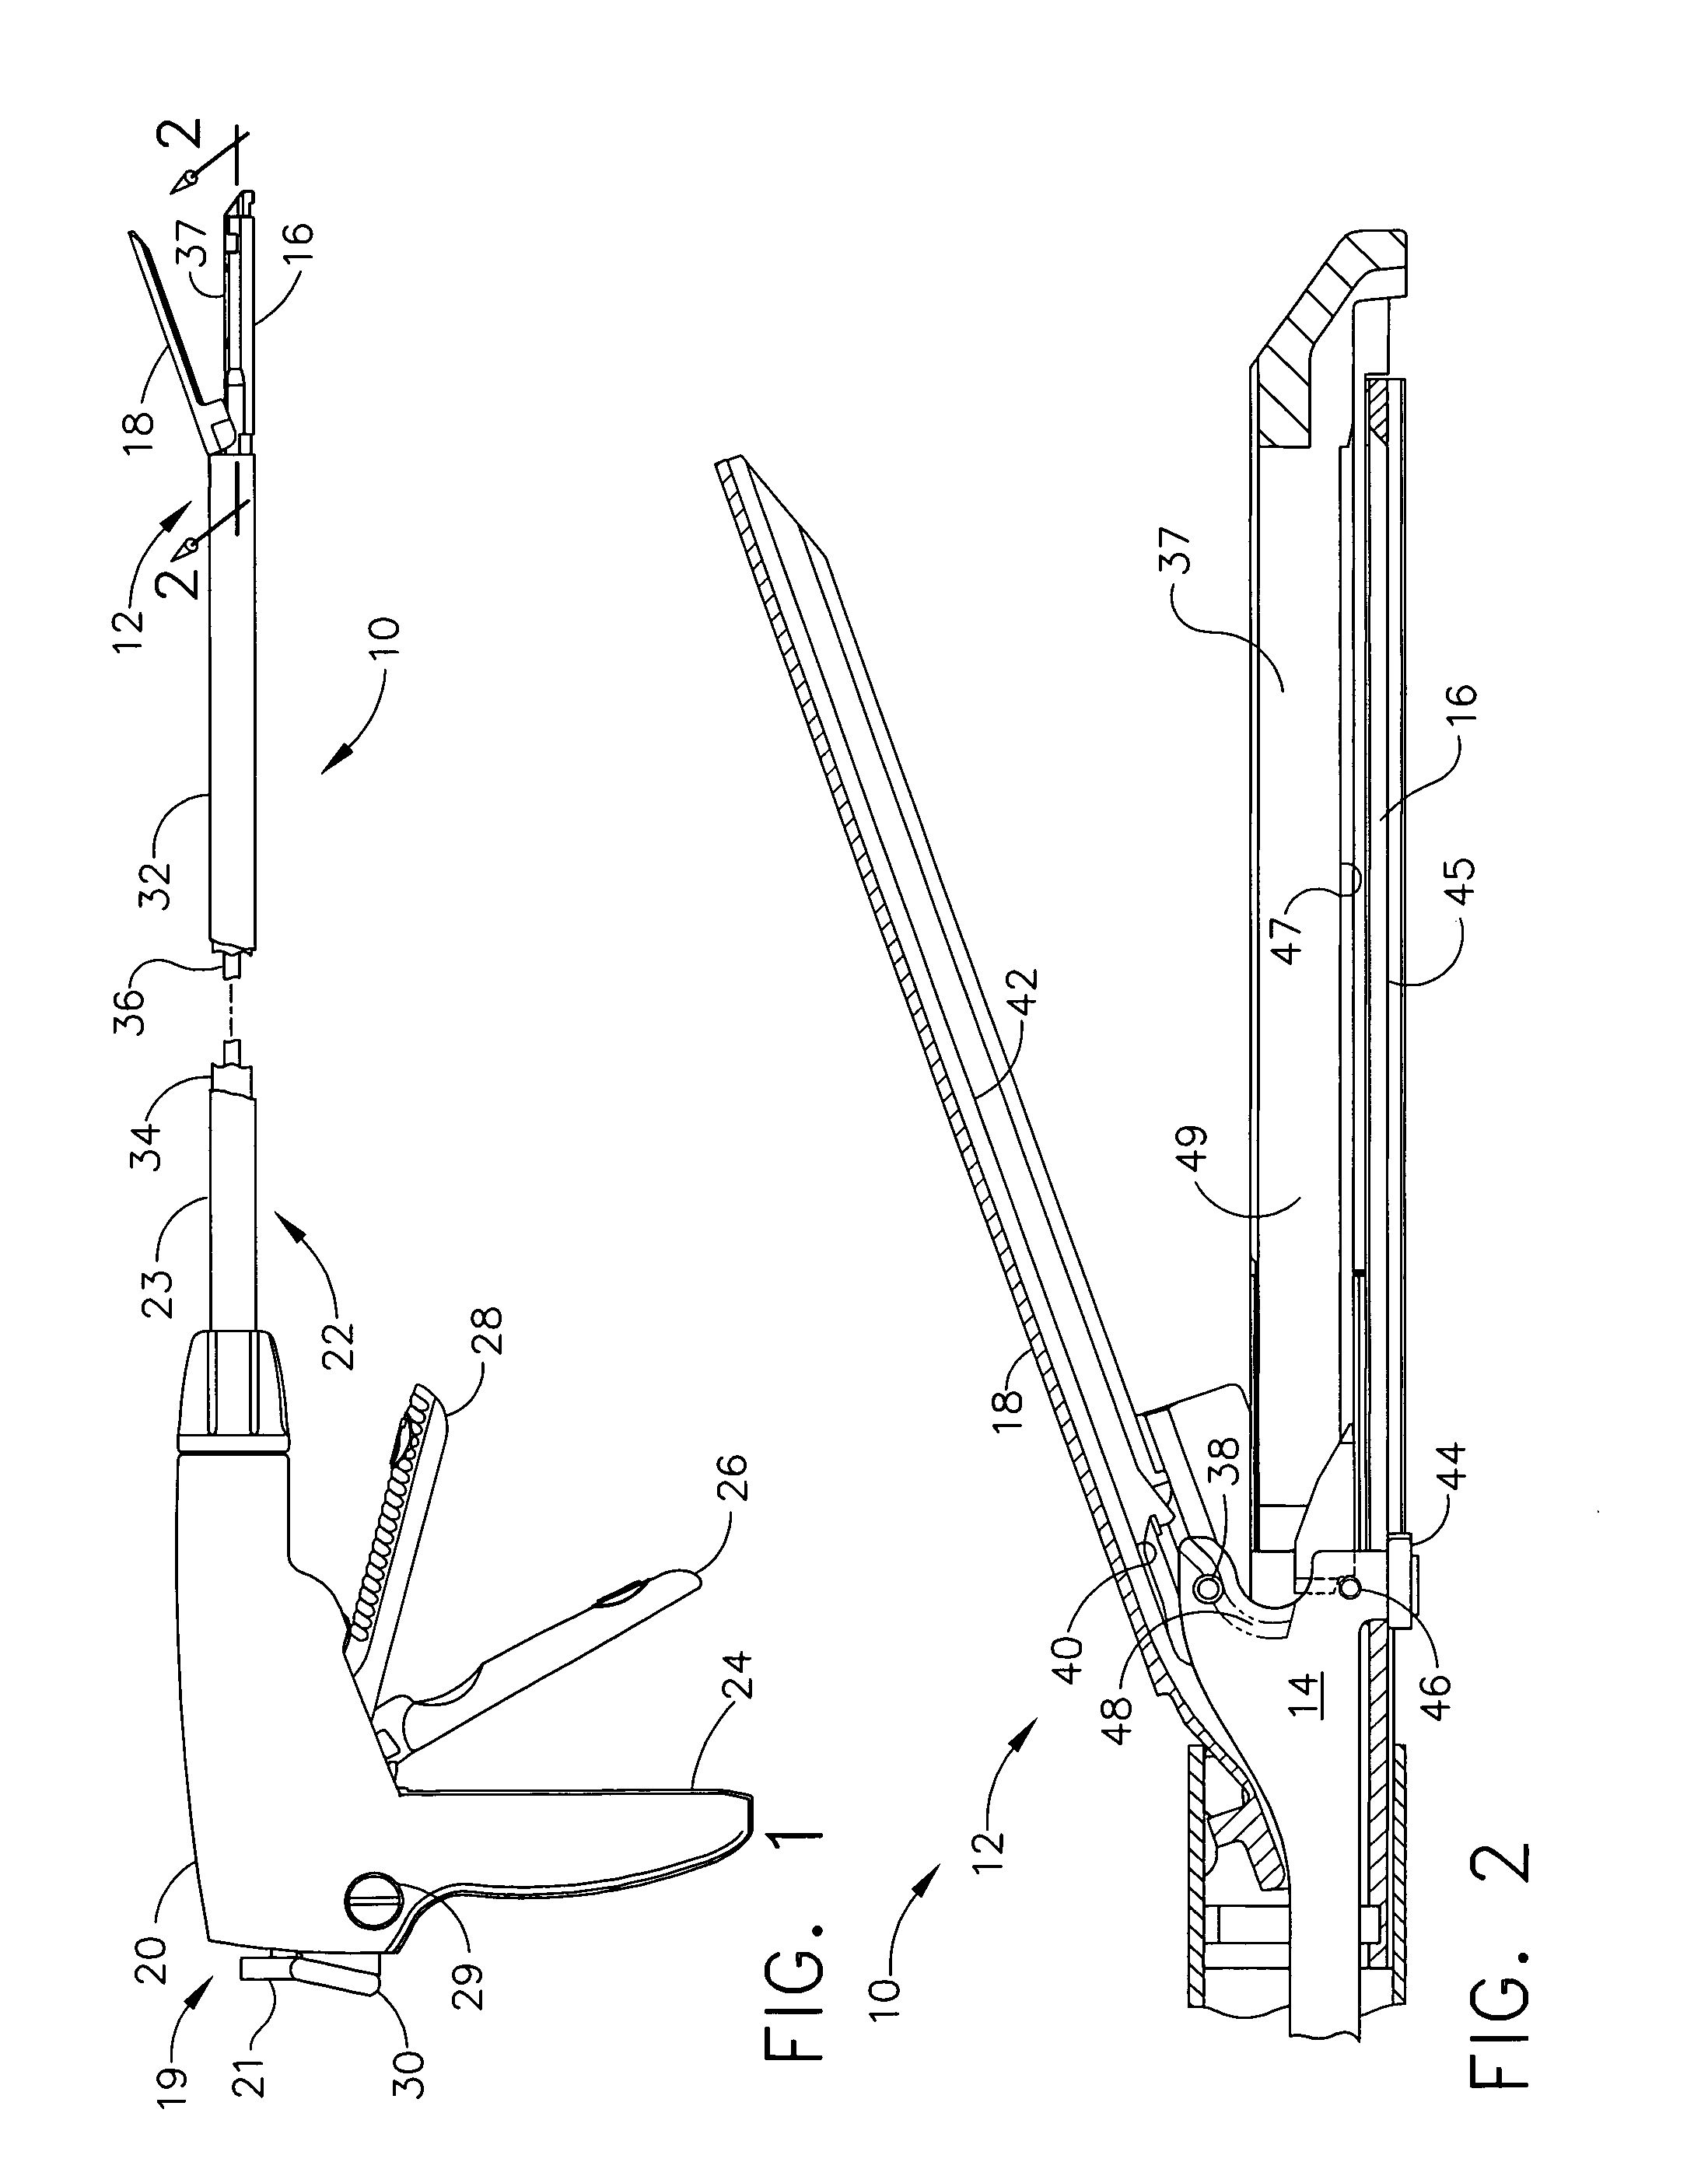 Surgical stapling instrument having preloaded firing assistance mechanism